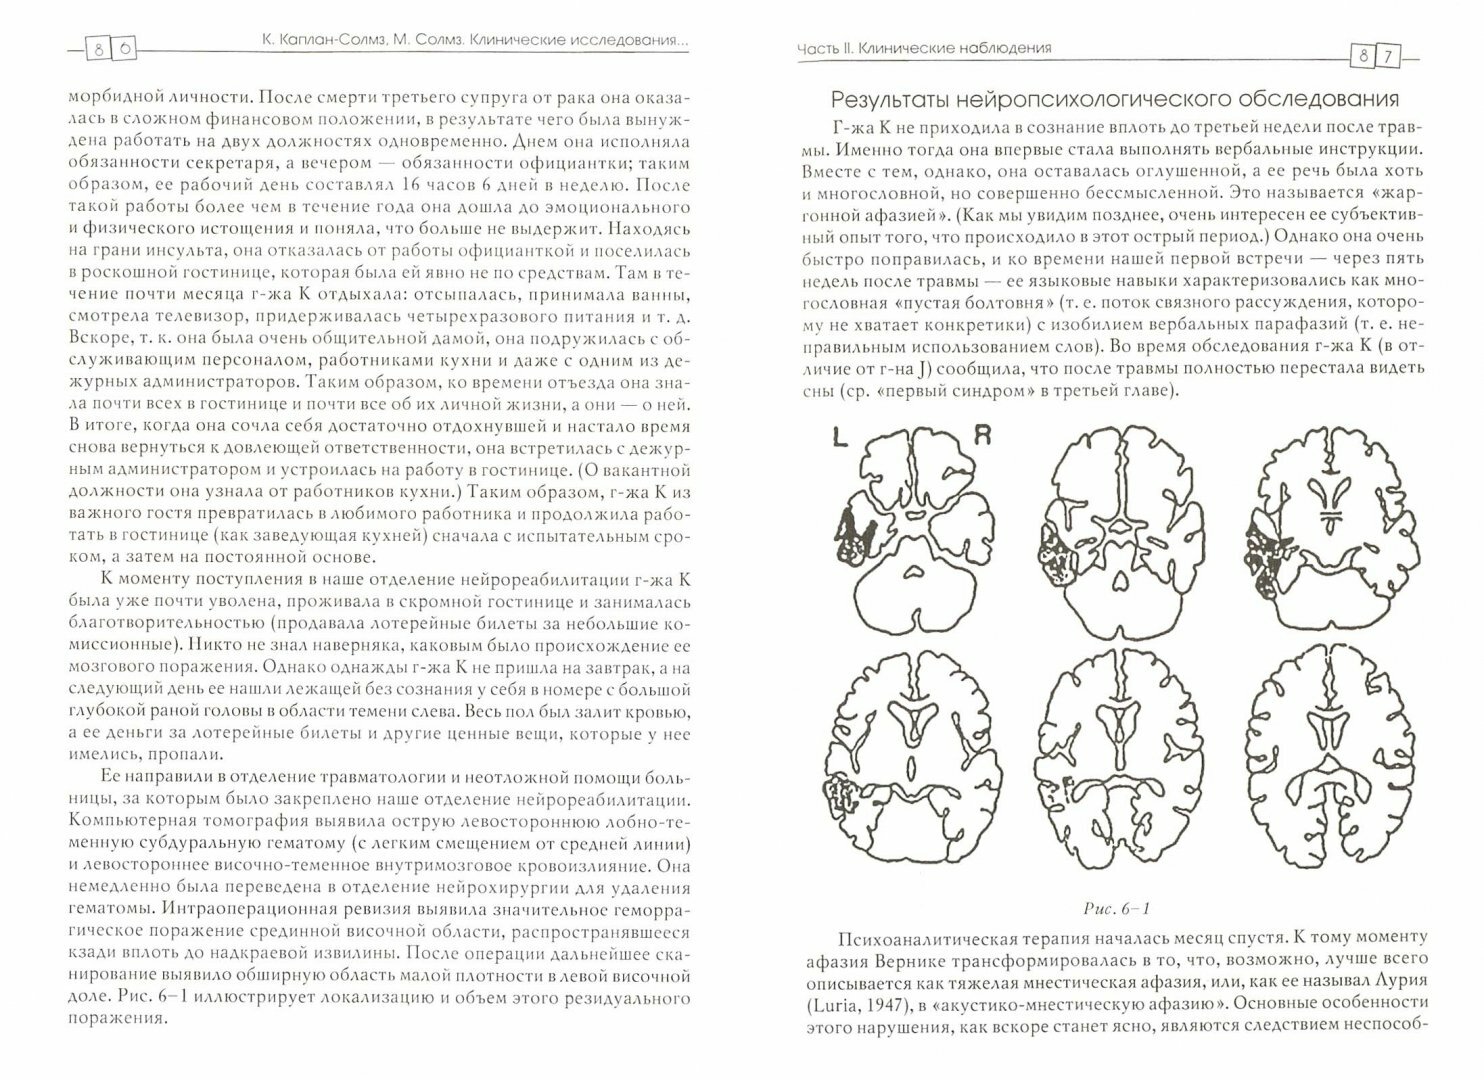 Клинические исследования в нейропсихоанализе - фото №3